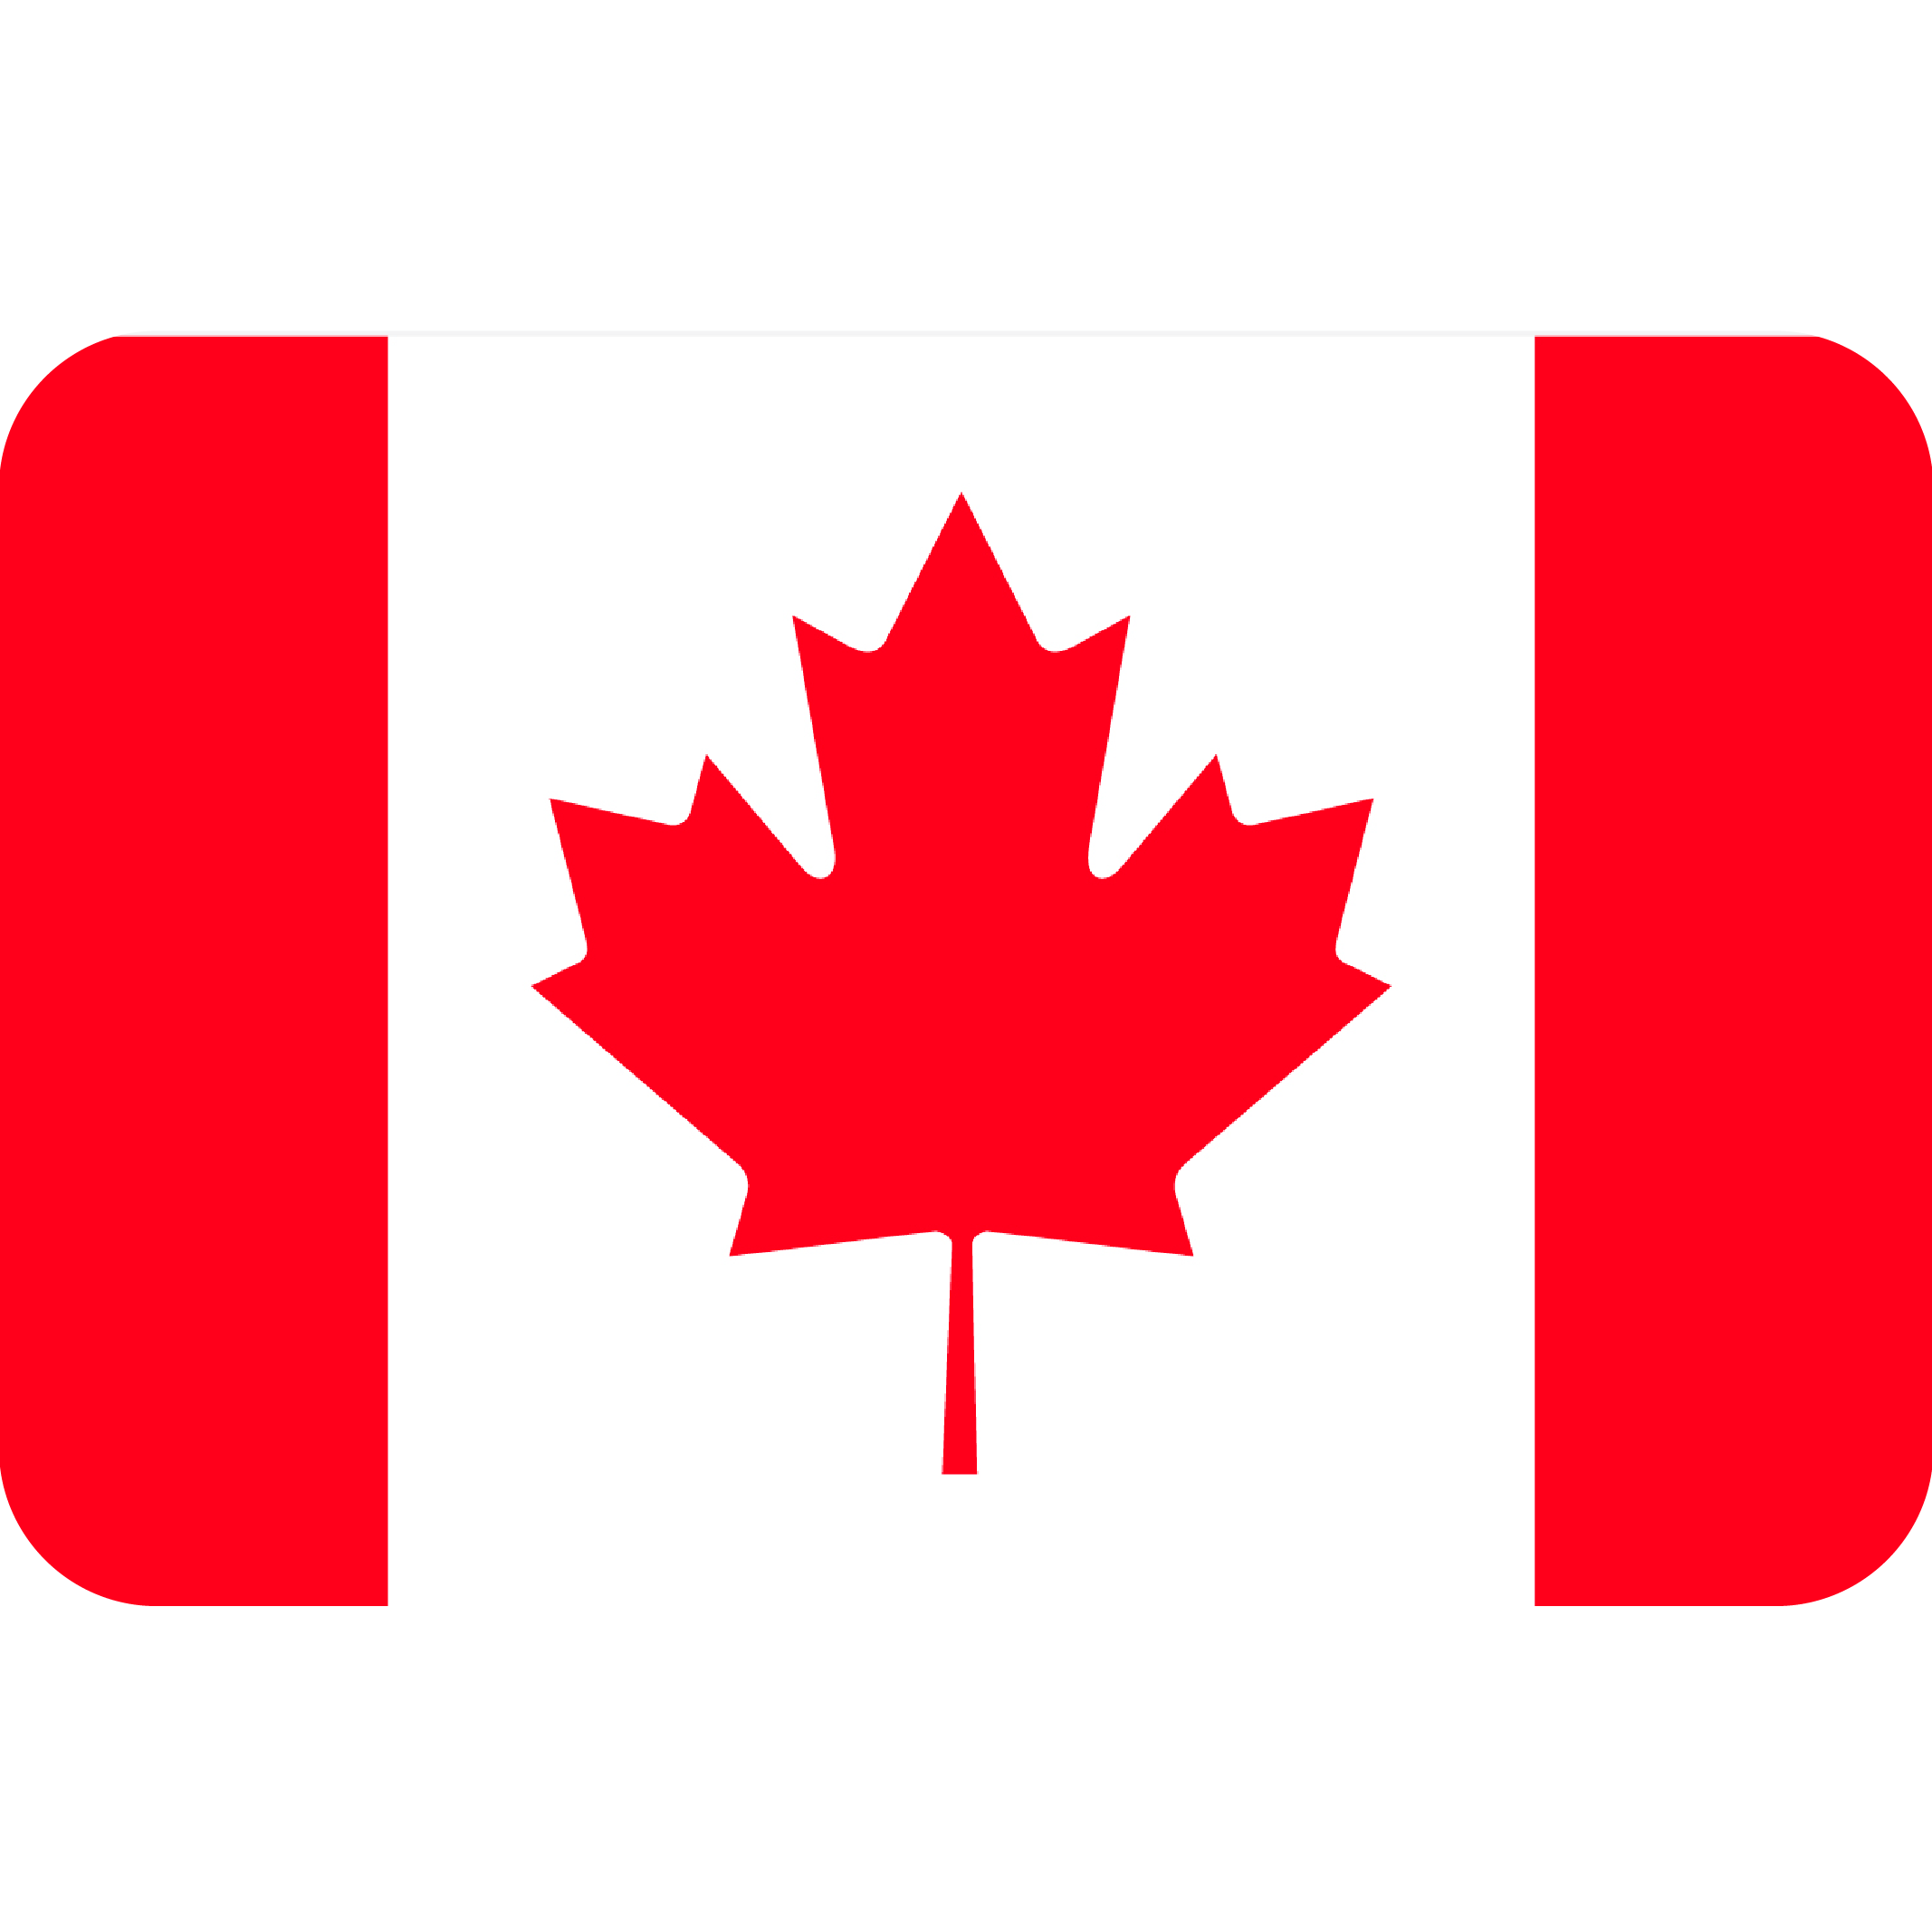 Canada (CA$)